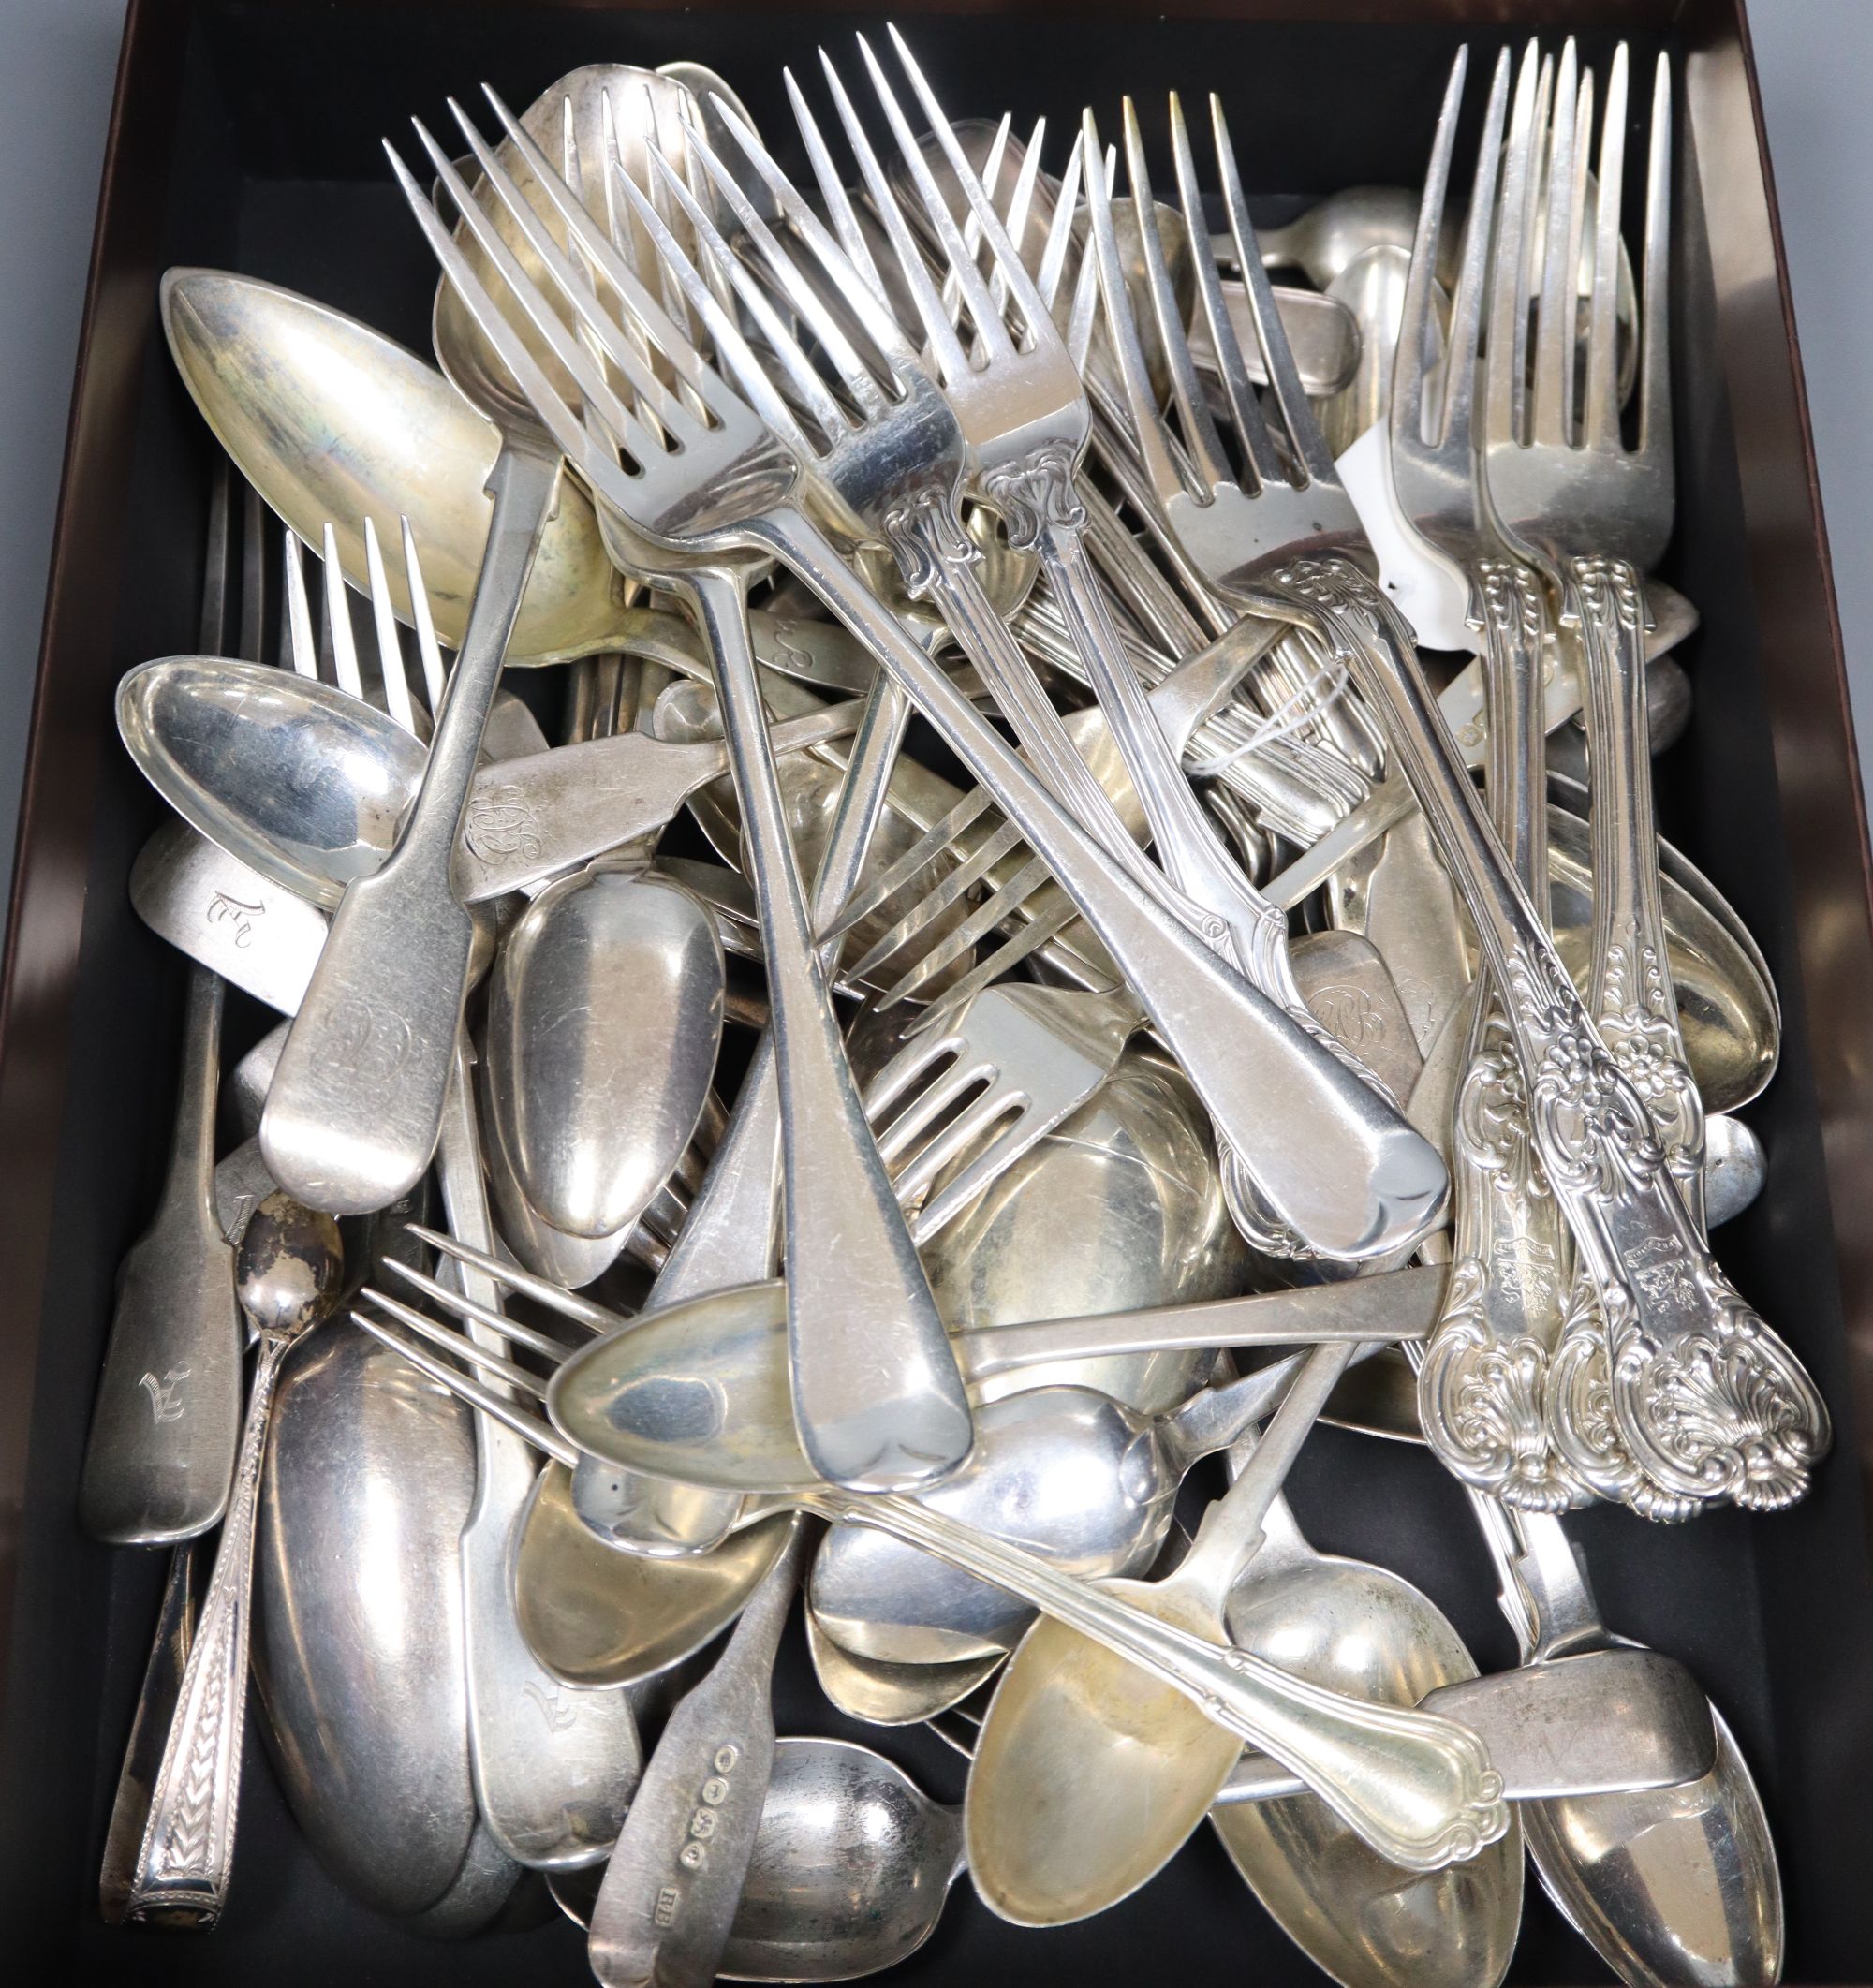 Assorted silver flatware.